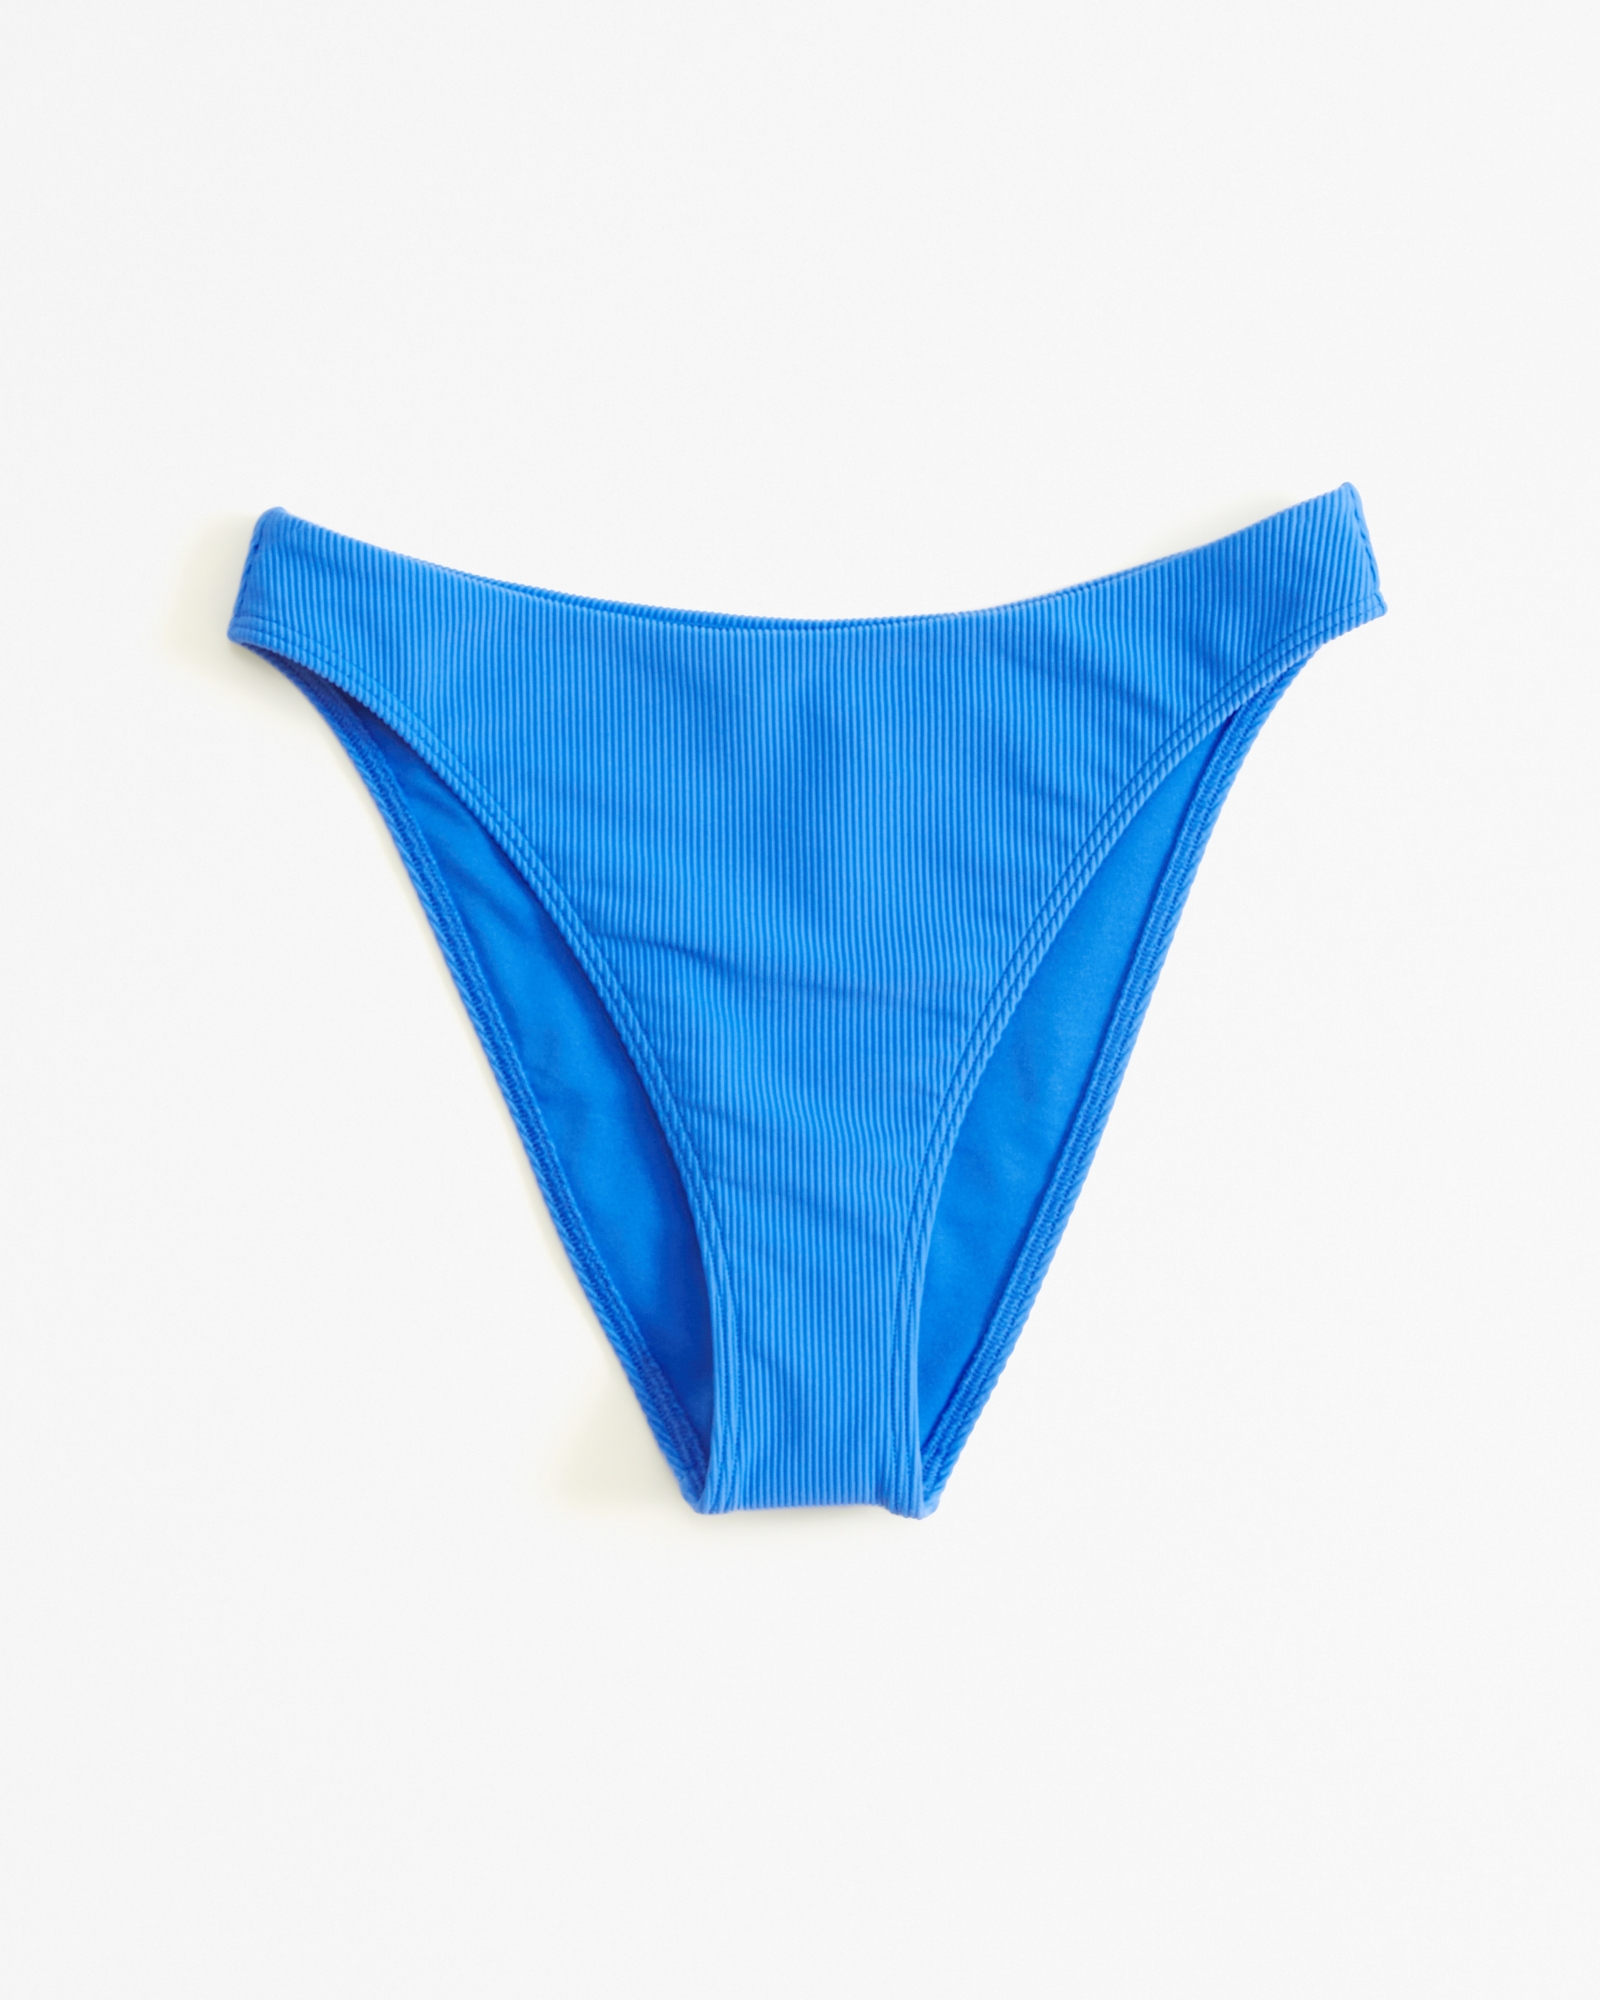 Hygiene Label Clear Tape, swimwear lingerie underwear brief bikini